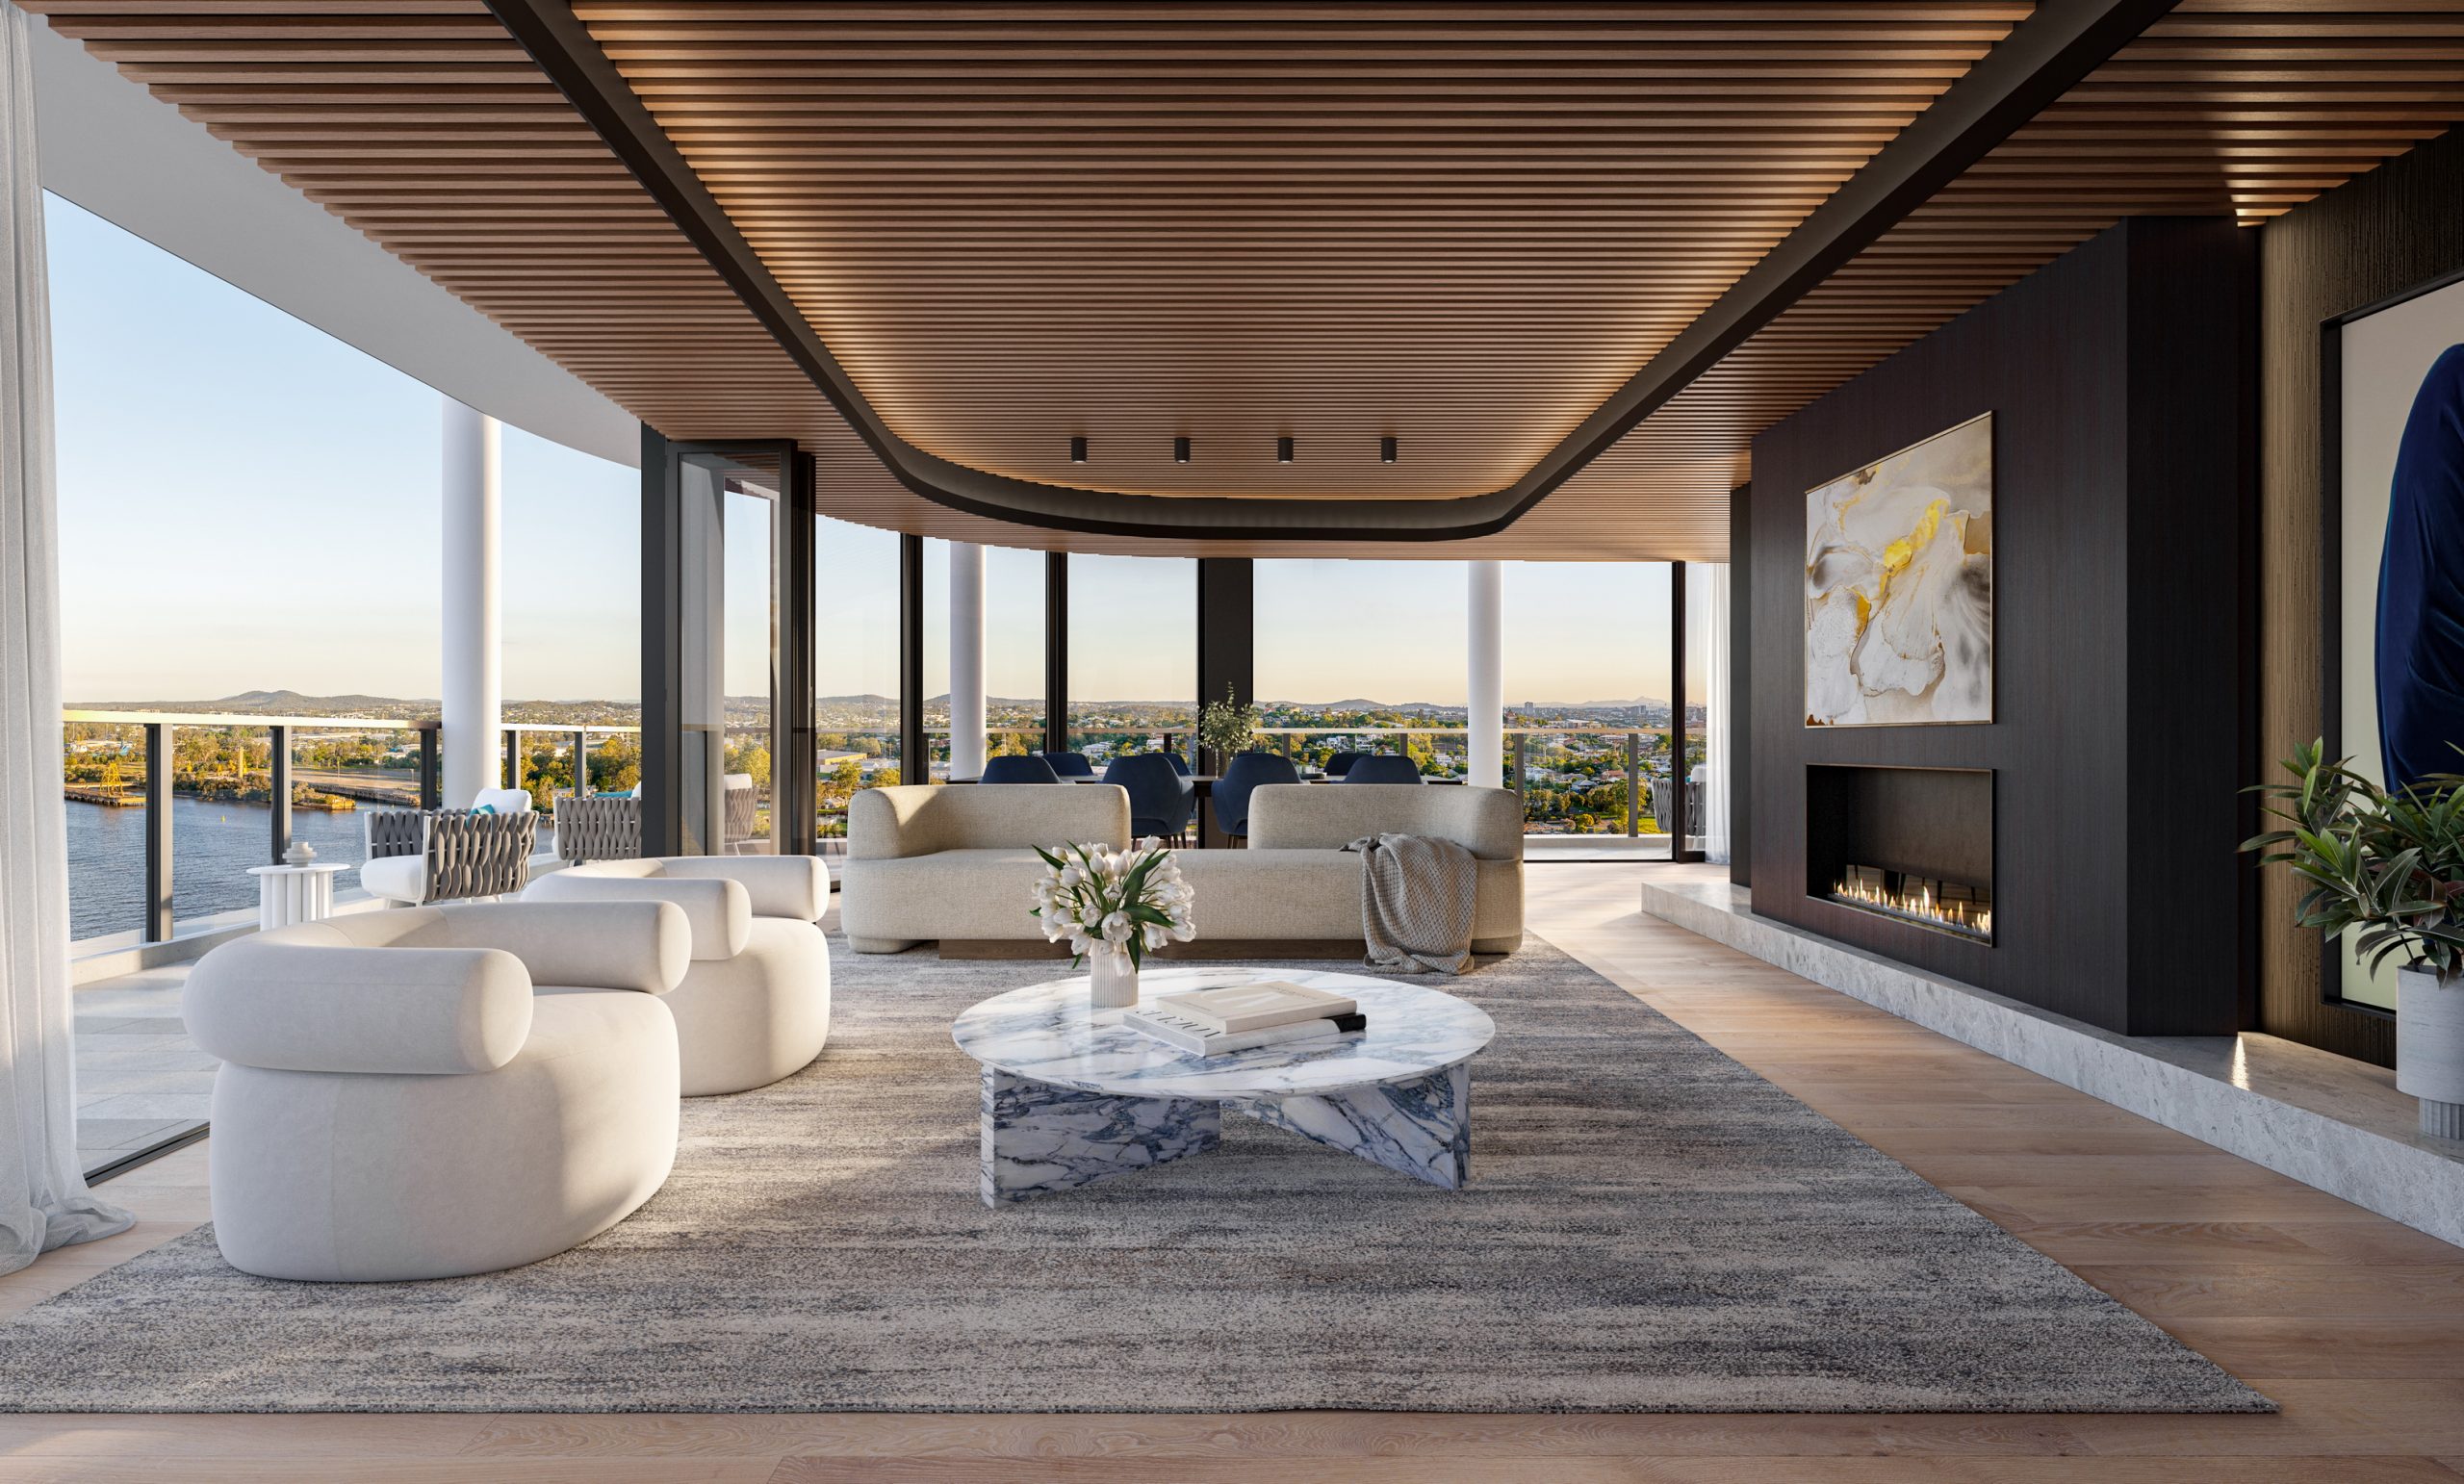 Rivello-queensland-render-3d-fkd-studio-architecture-luxury-interior-design-residential-lounge